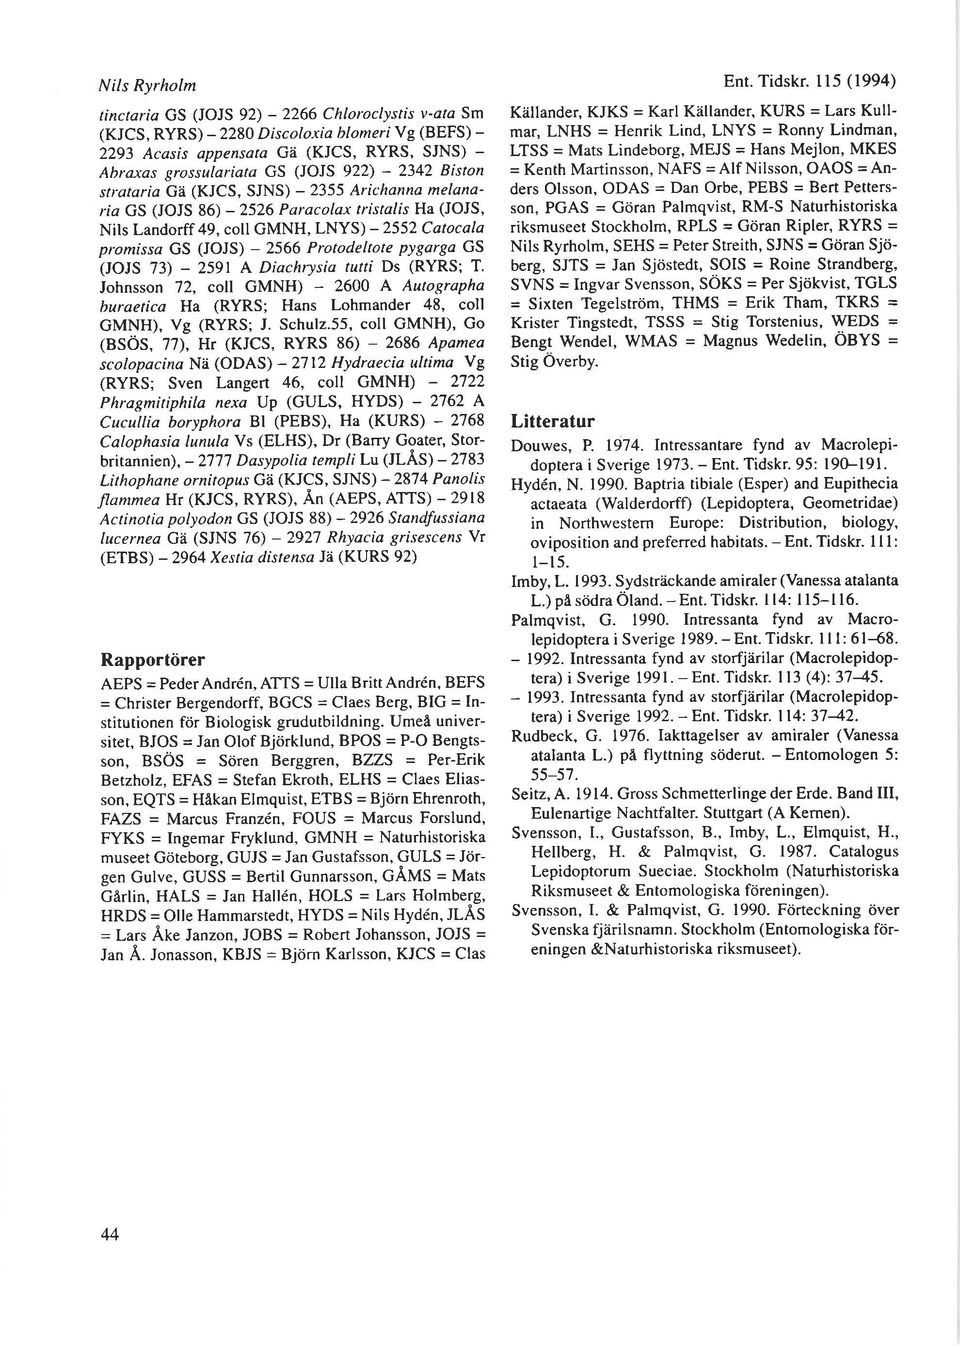 Protodeltote pygarga GS (JOJS 73) - 2591 A Diachrysia,urri Ds (RYRS; T. Johnsson 72, coll GMNH) - 2600 A Autographa buraetica Ha (RYRS; Hans Lohmander 48, coll GMNH), Vg (RYRS; J. Schulz.